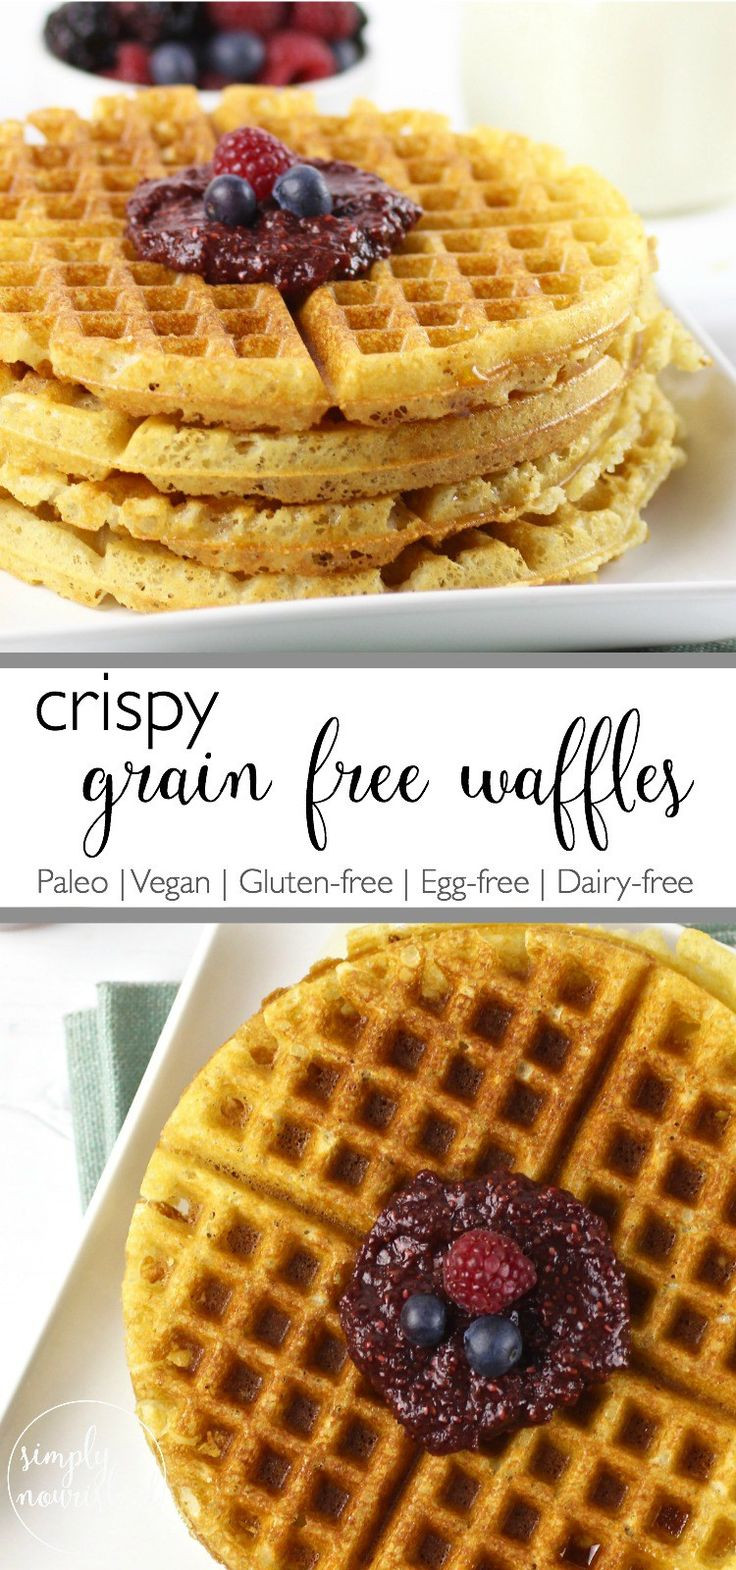 Grain Free Vegetarian Recipes
 Best 25 Grain free ideas on Pinterest